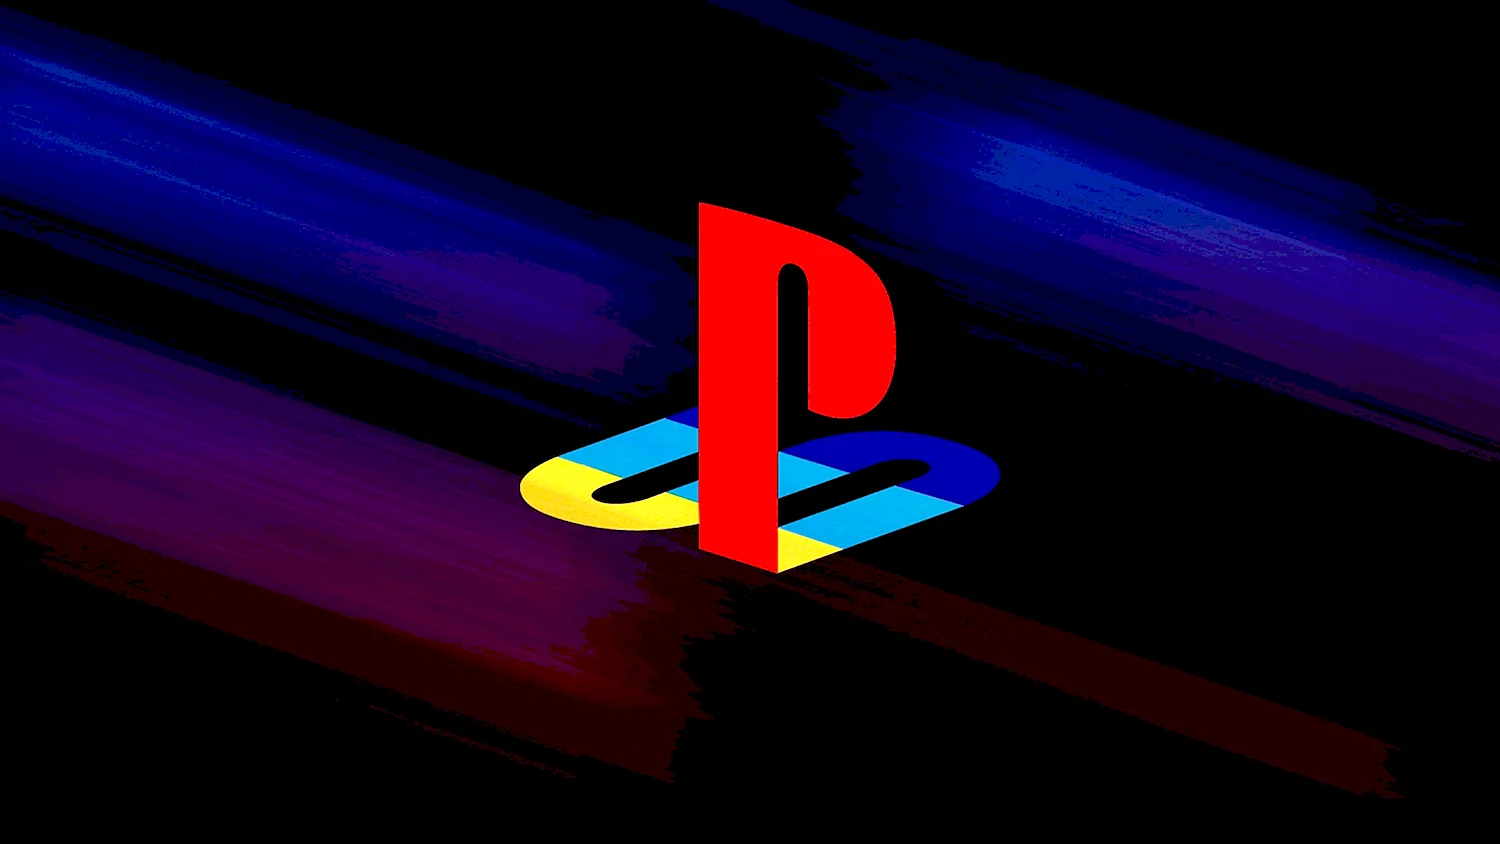 Ps2 logo